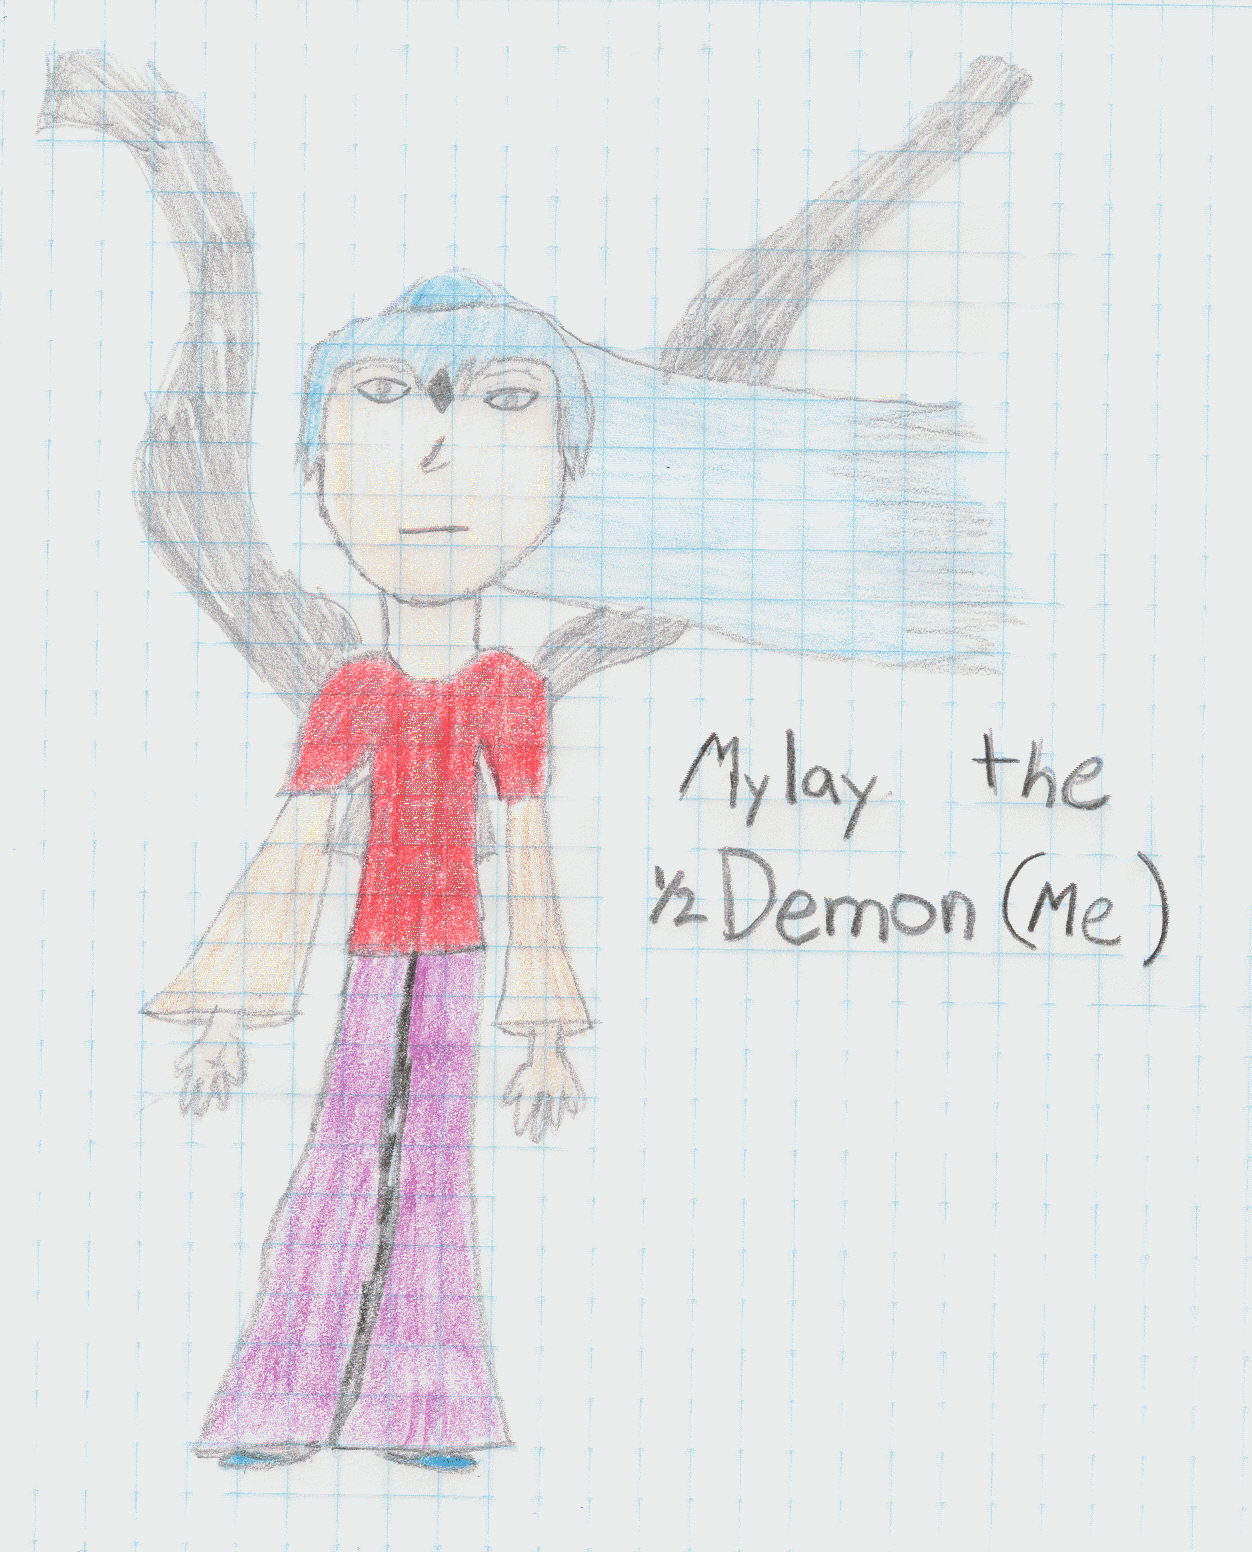 1/2 Demon by Neptune